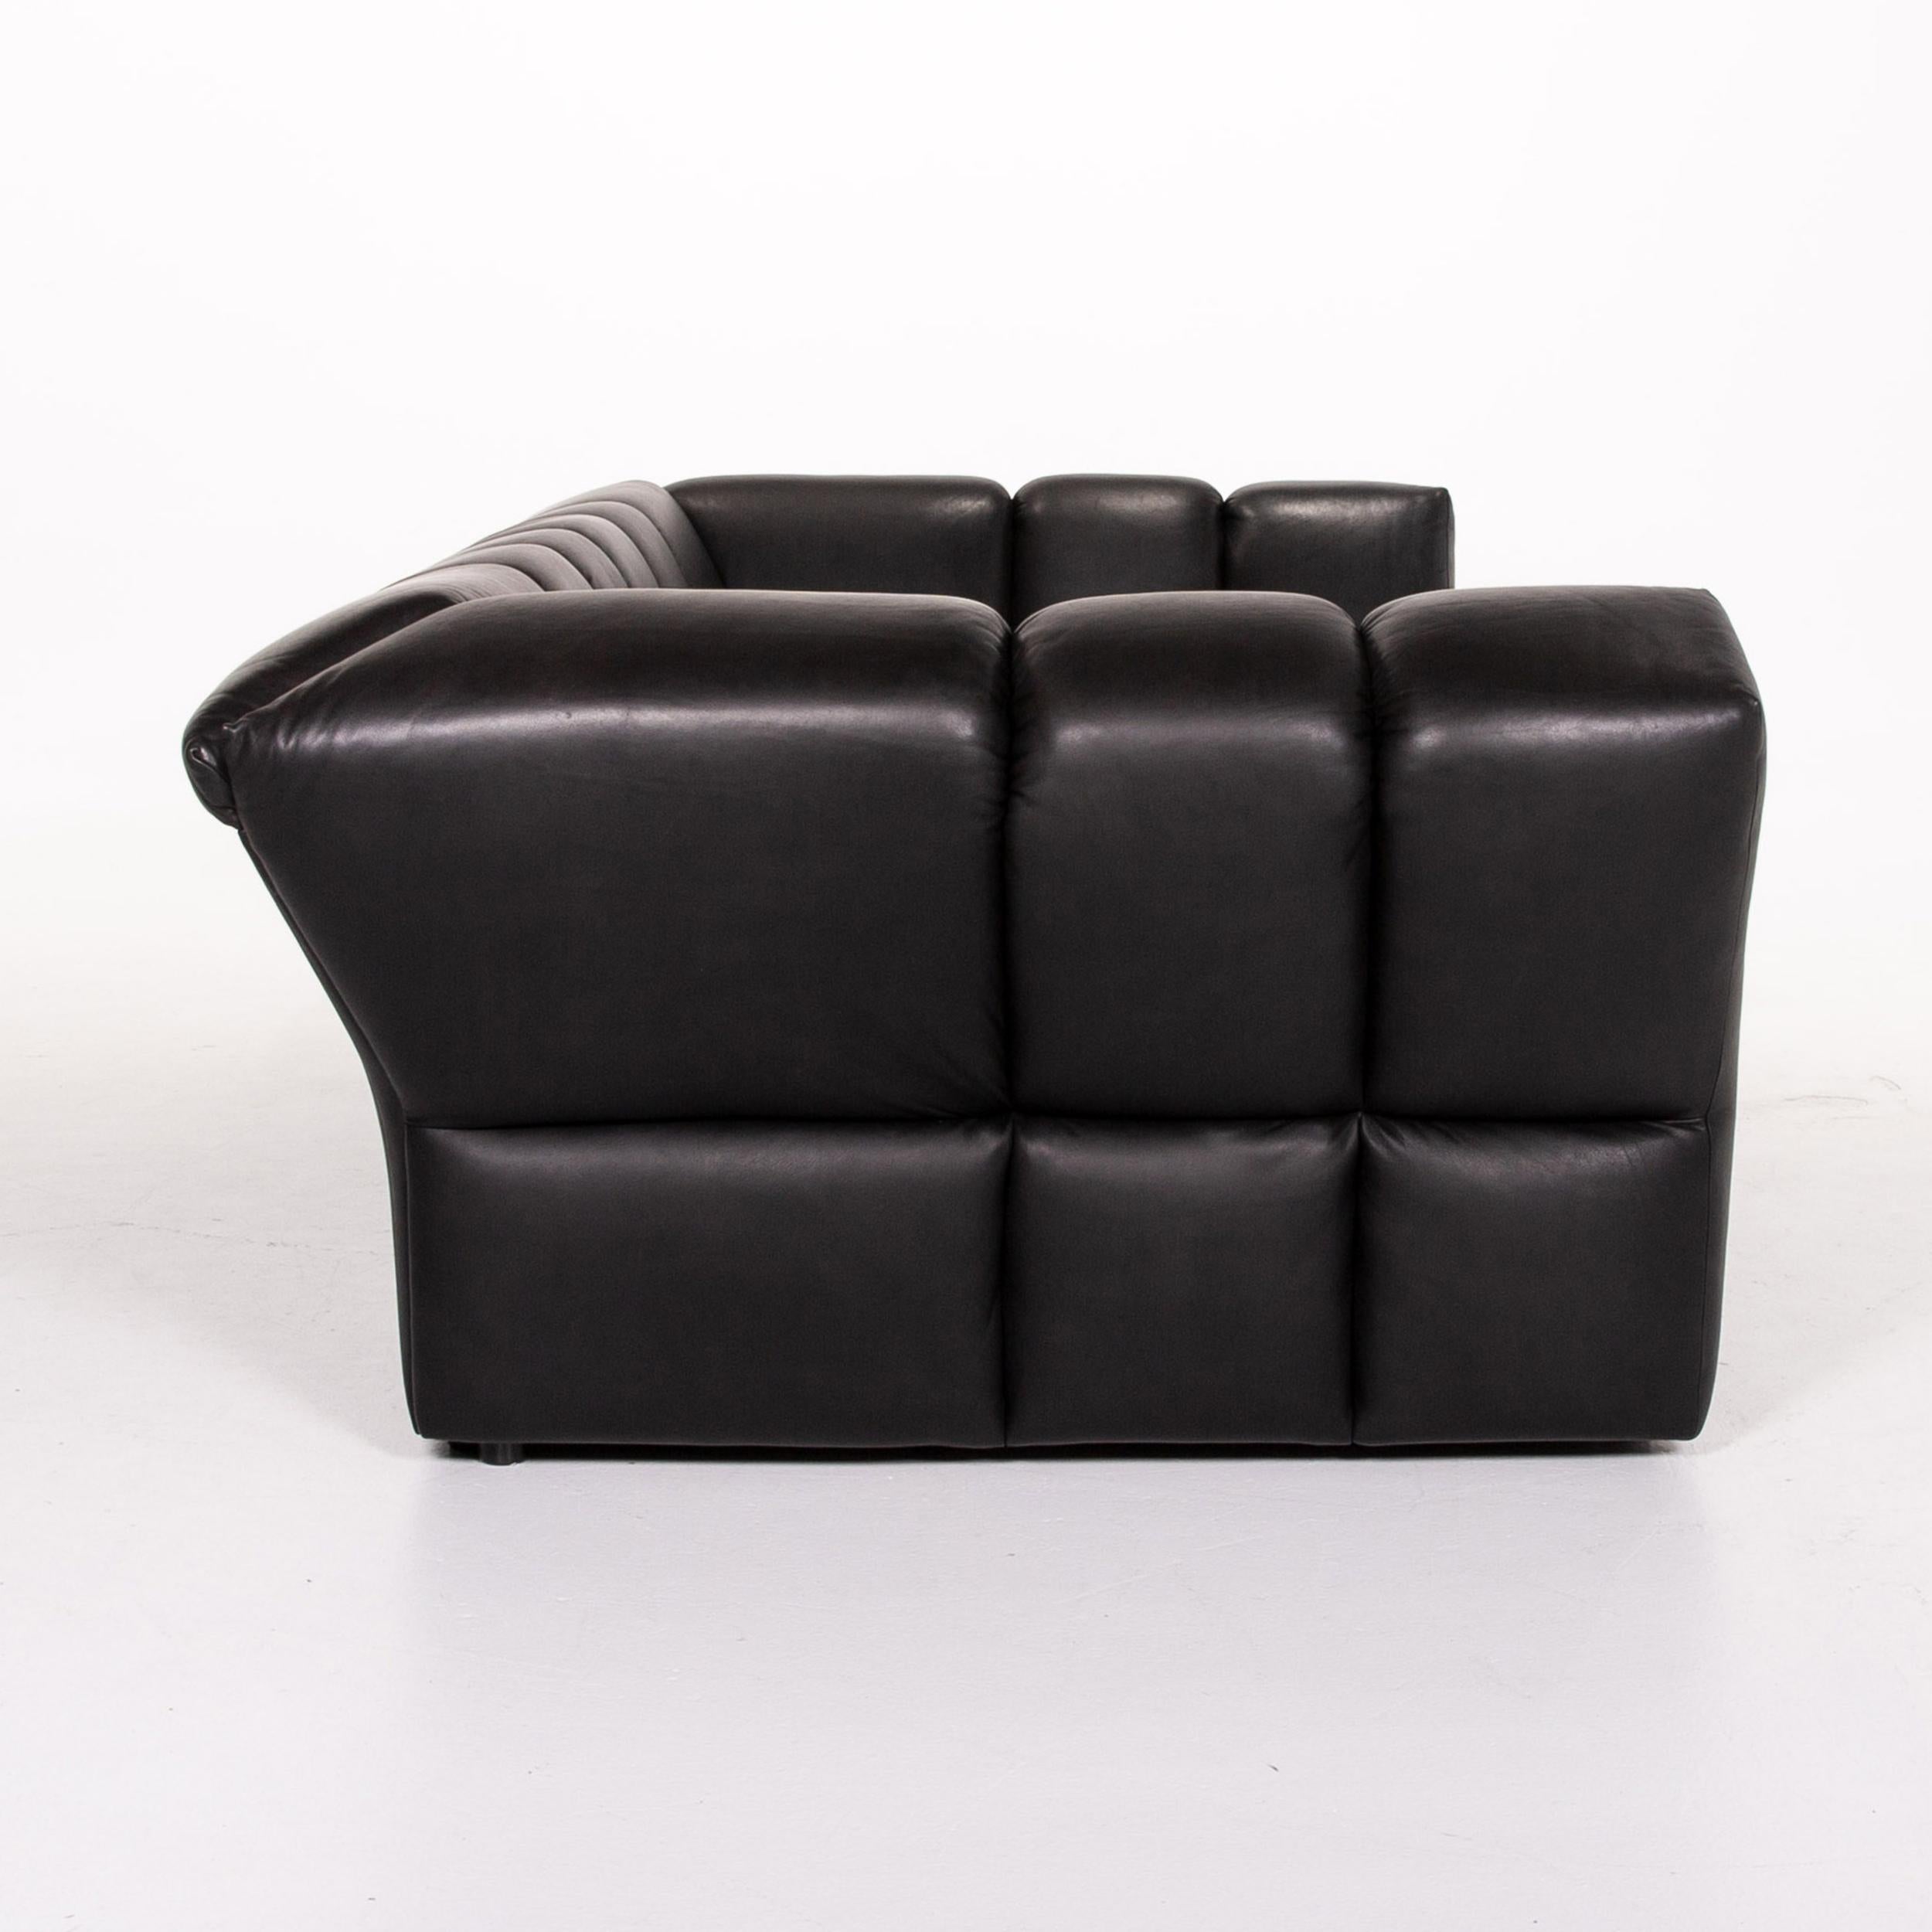 Bretz Chocolat Leather Sofa Black Four-Seat Couch 2